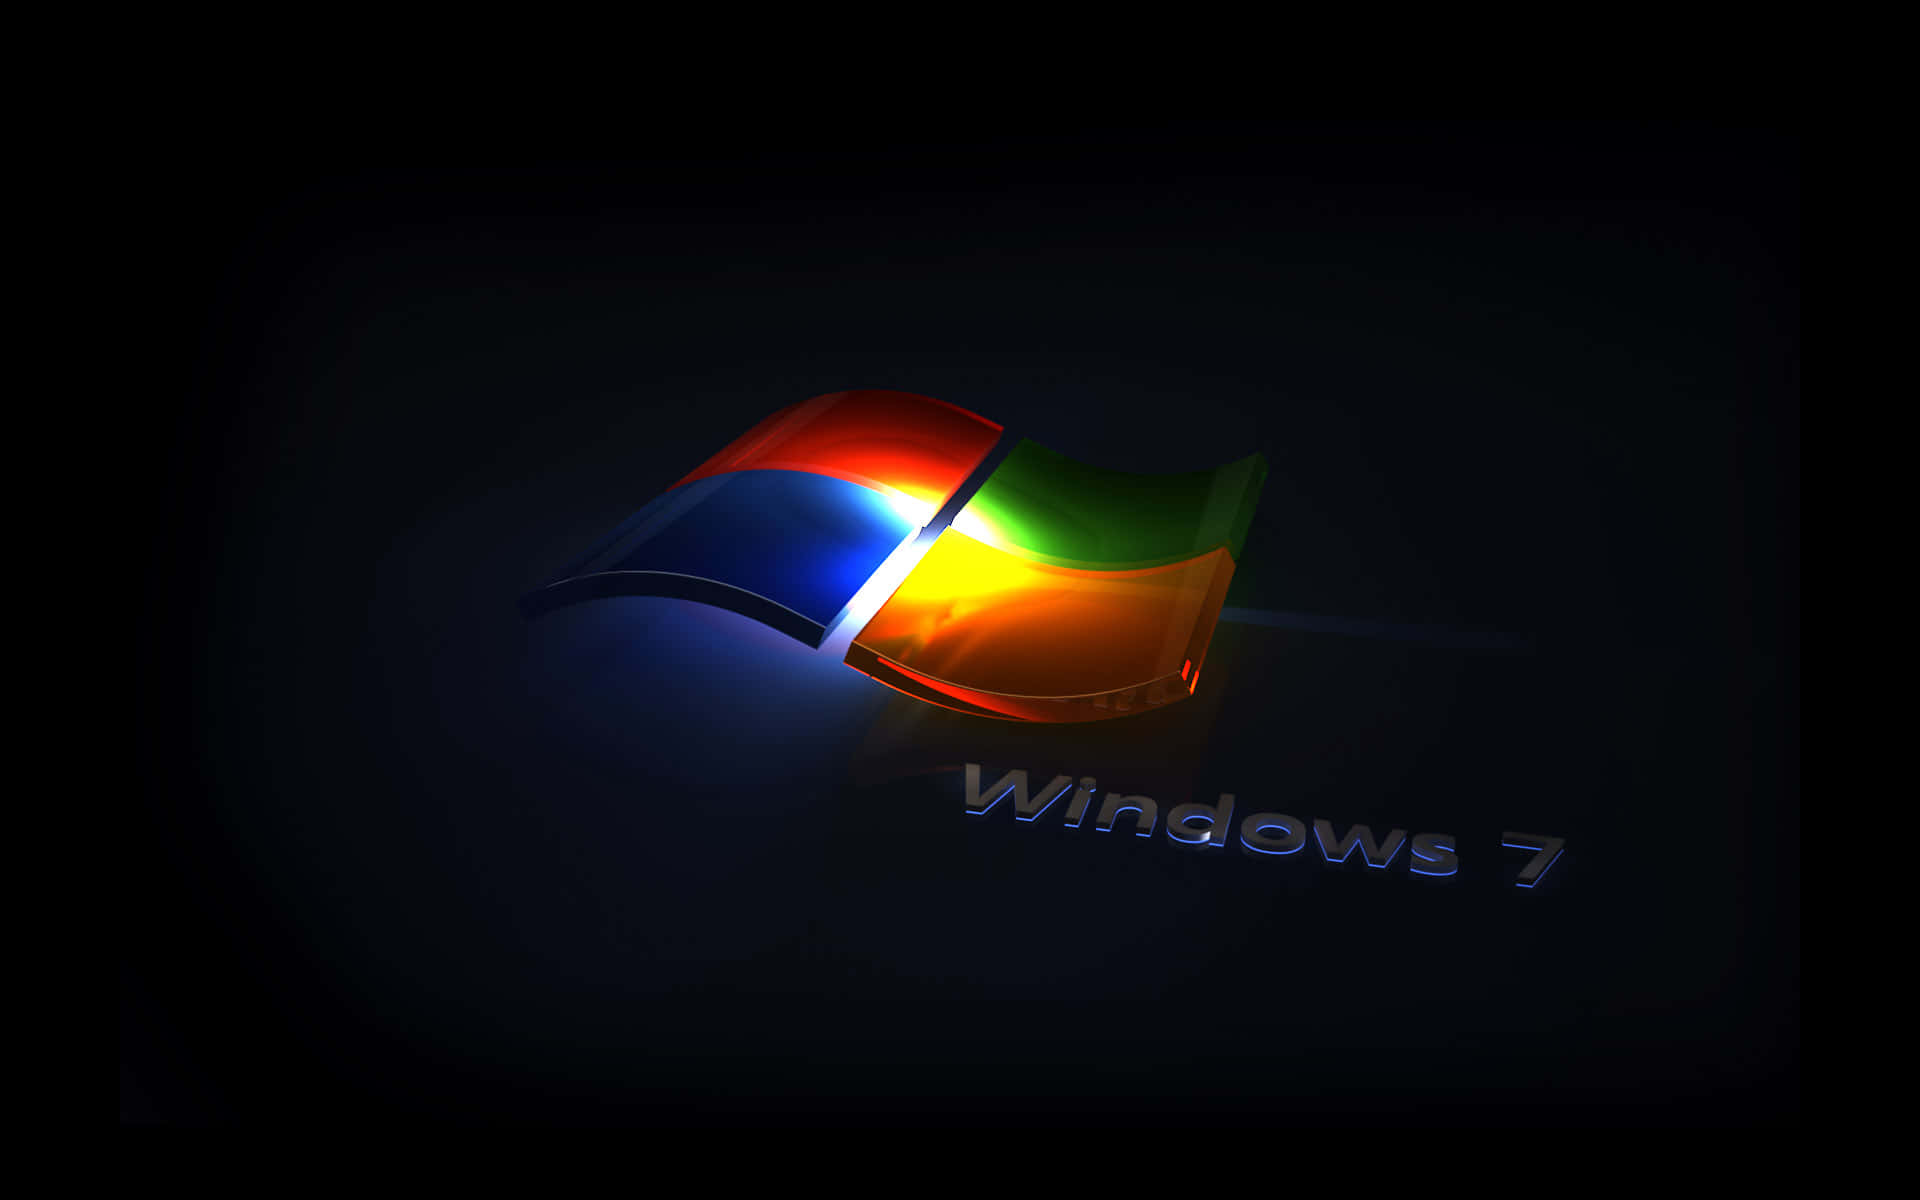 Njutav Skönheten I Windows 7's Estetik